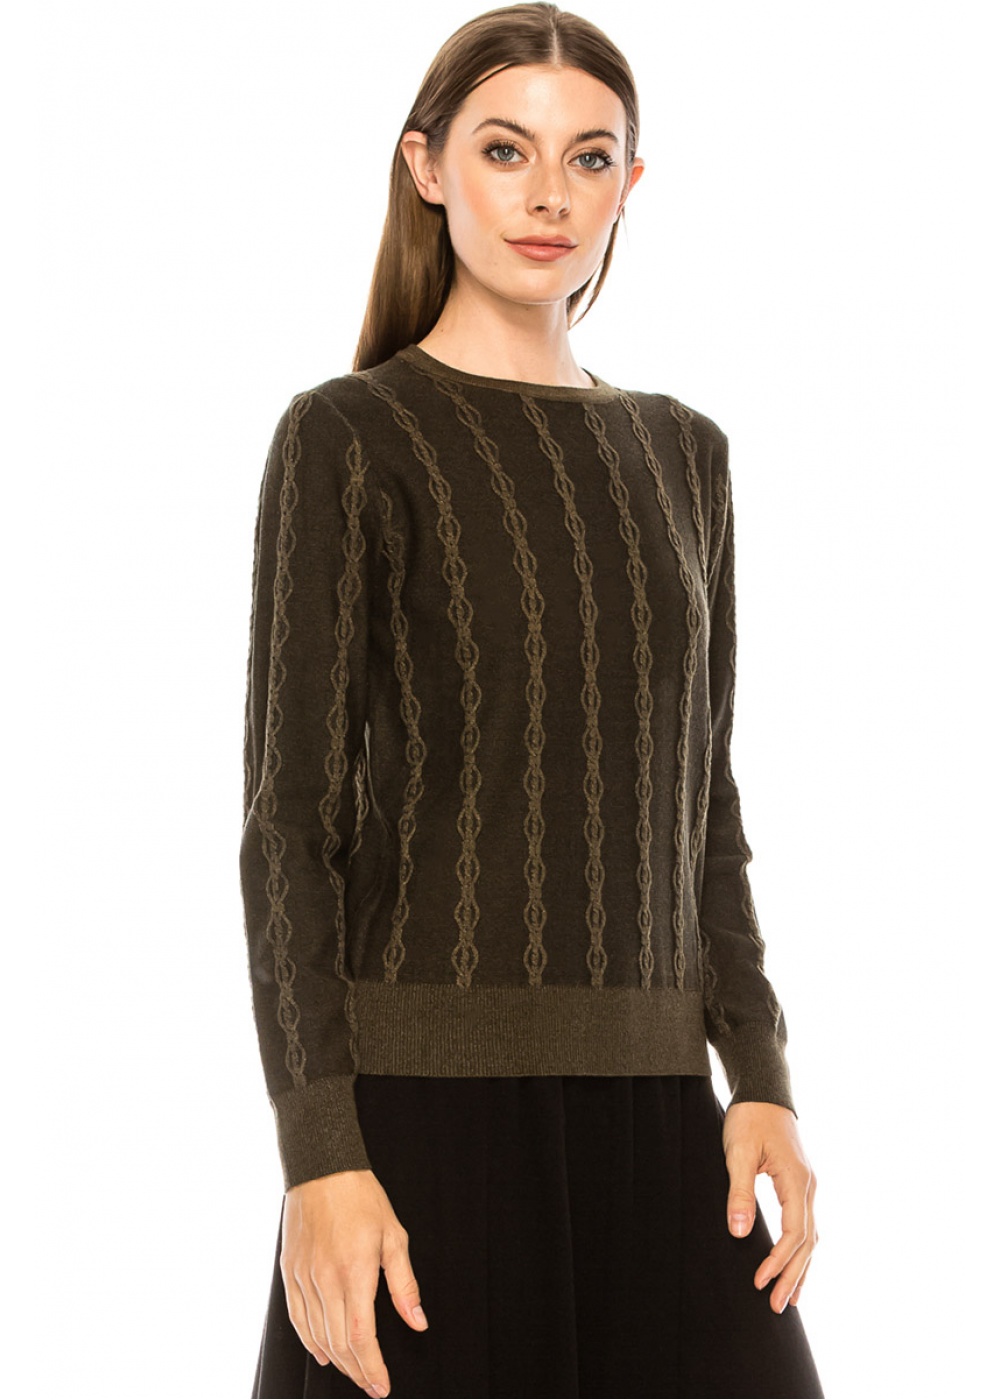 Elegant pattern sweater in olive